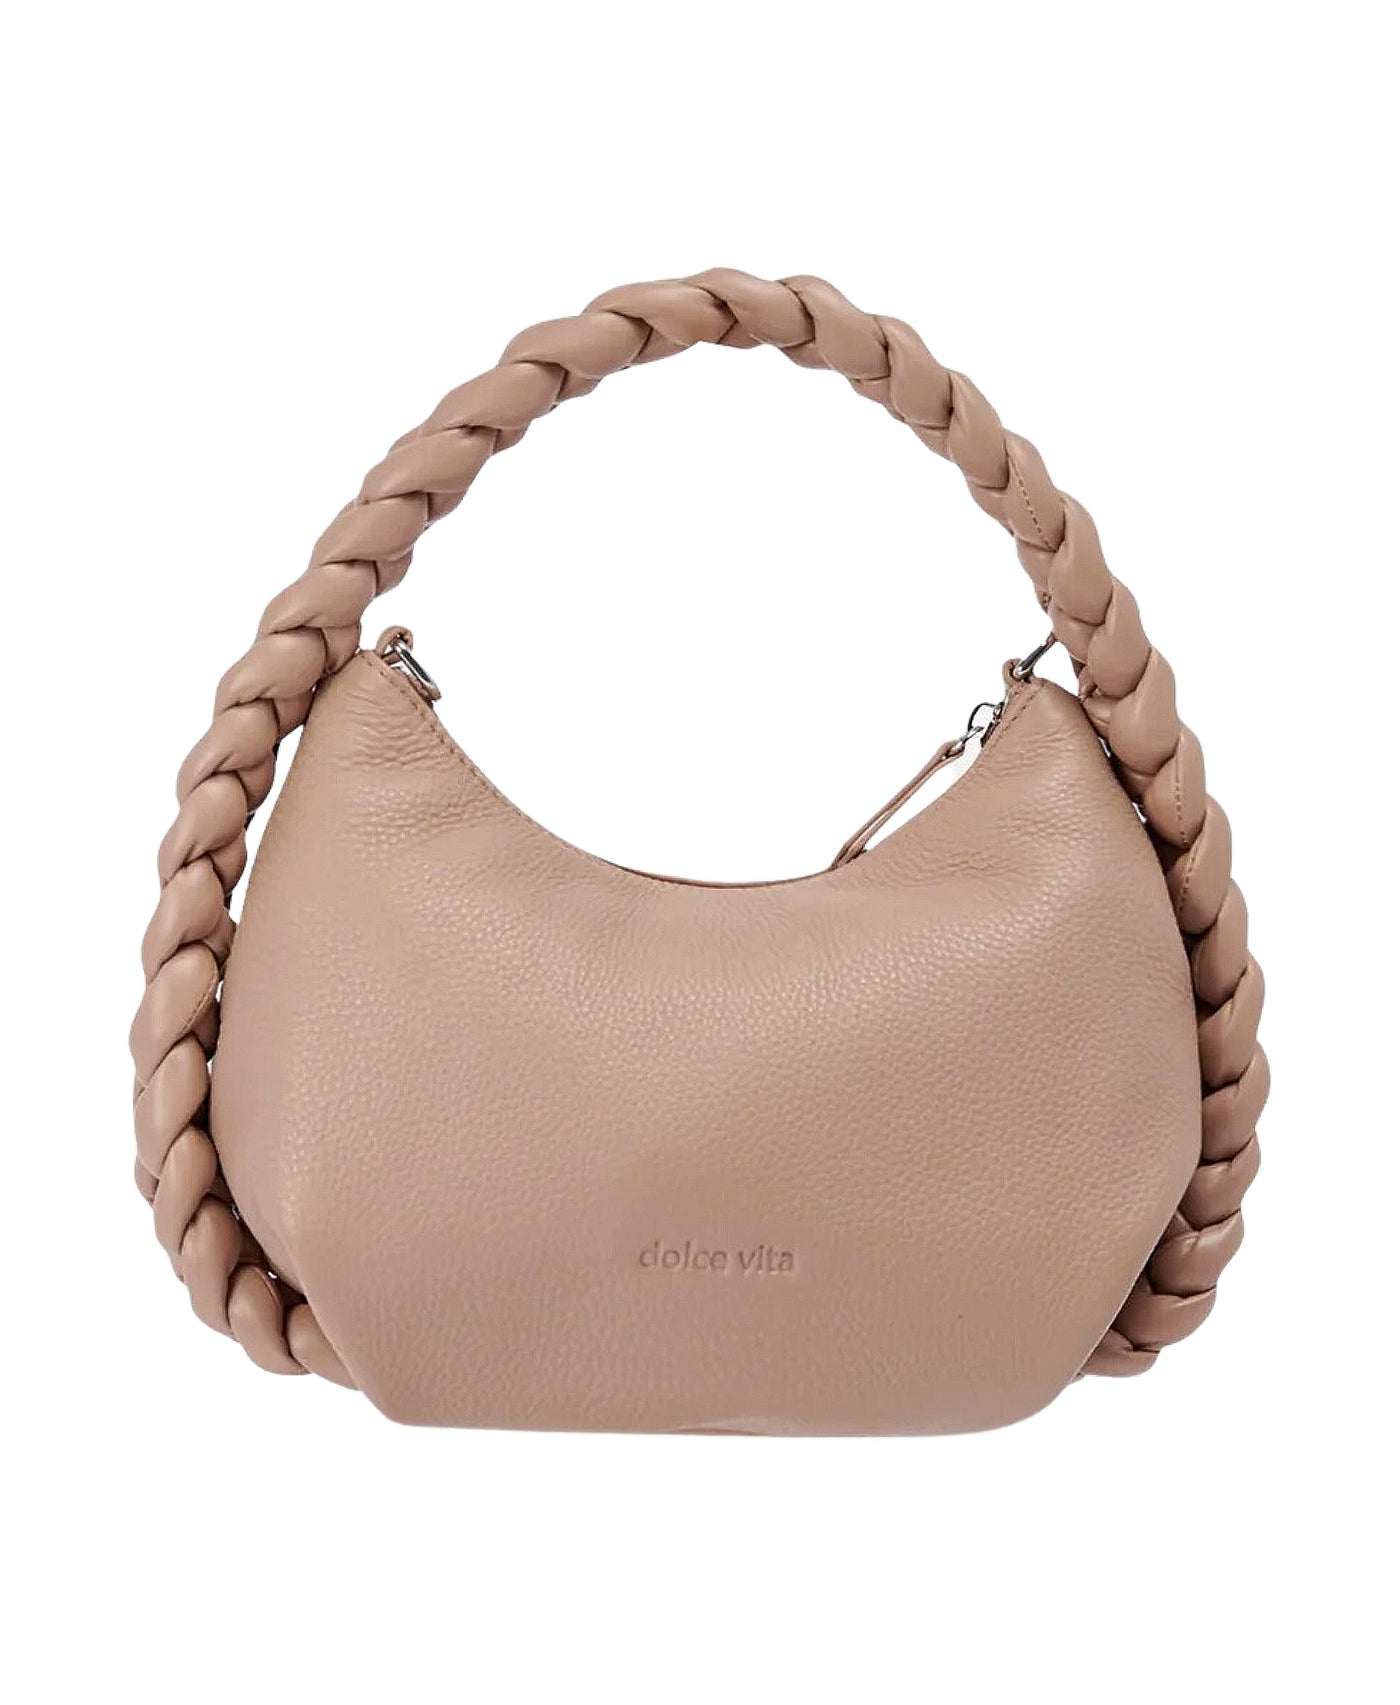 Pebble Leather Handbag w/ Braid Detail image 2